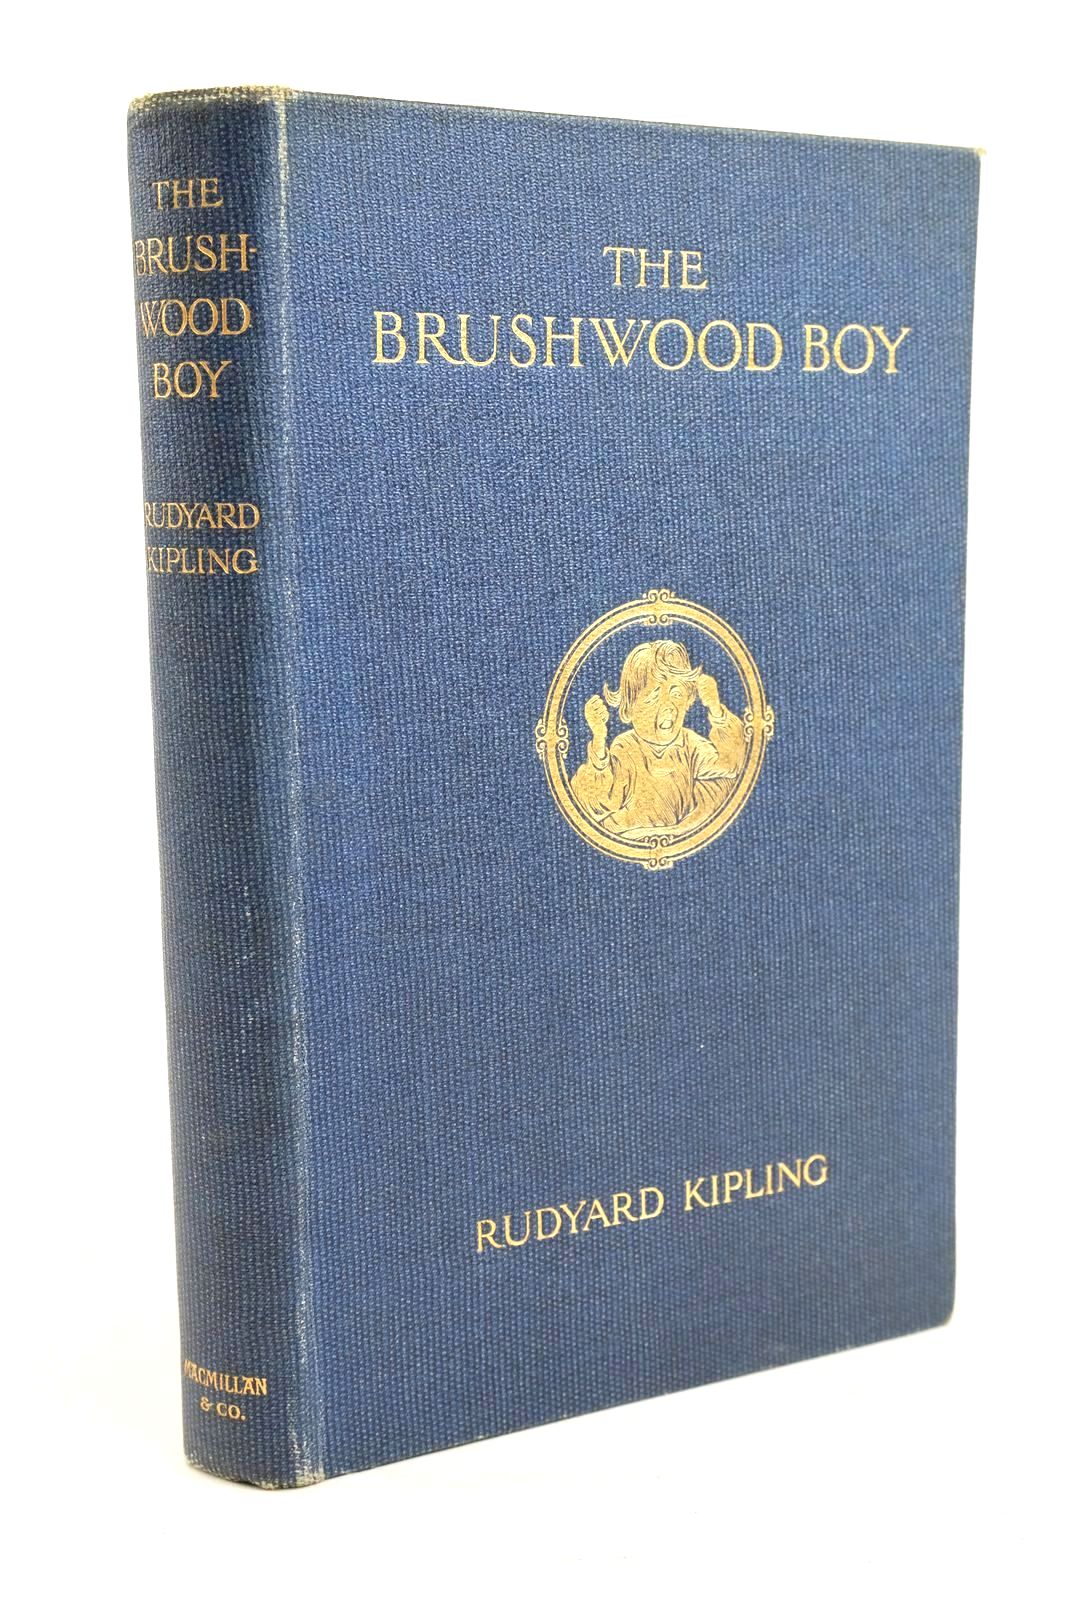 Photo of THE BRUSHWOOD BOY- Stock Number: 1321077